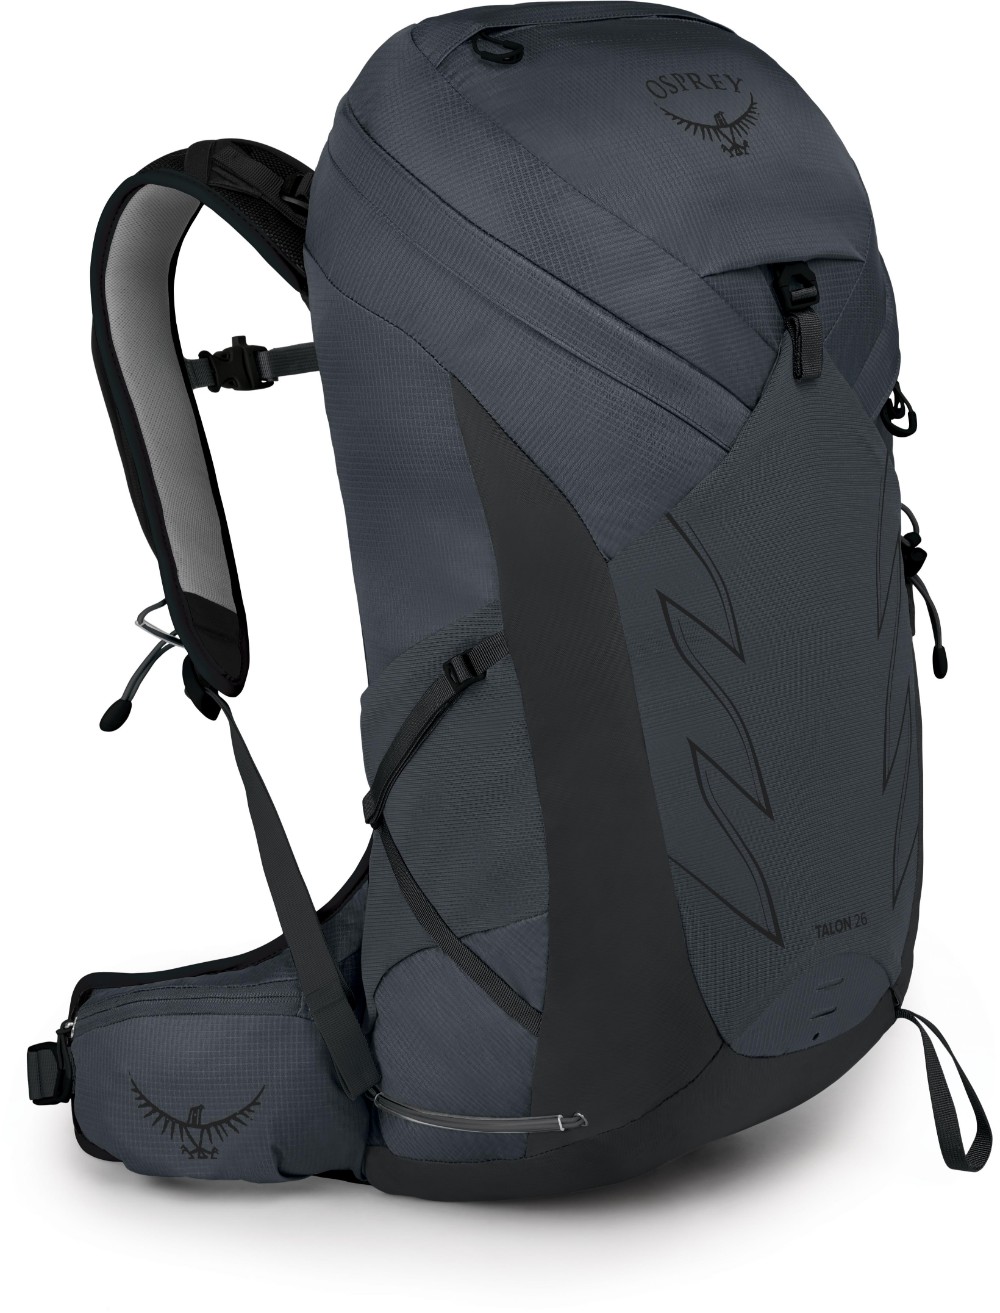 Talon 26 Backpack image 0